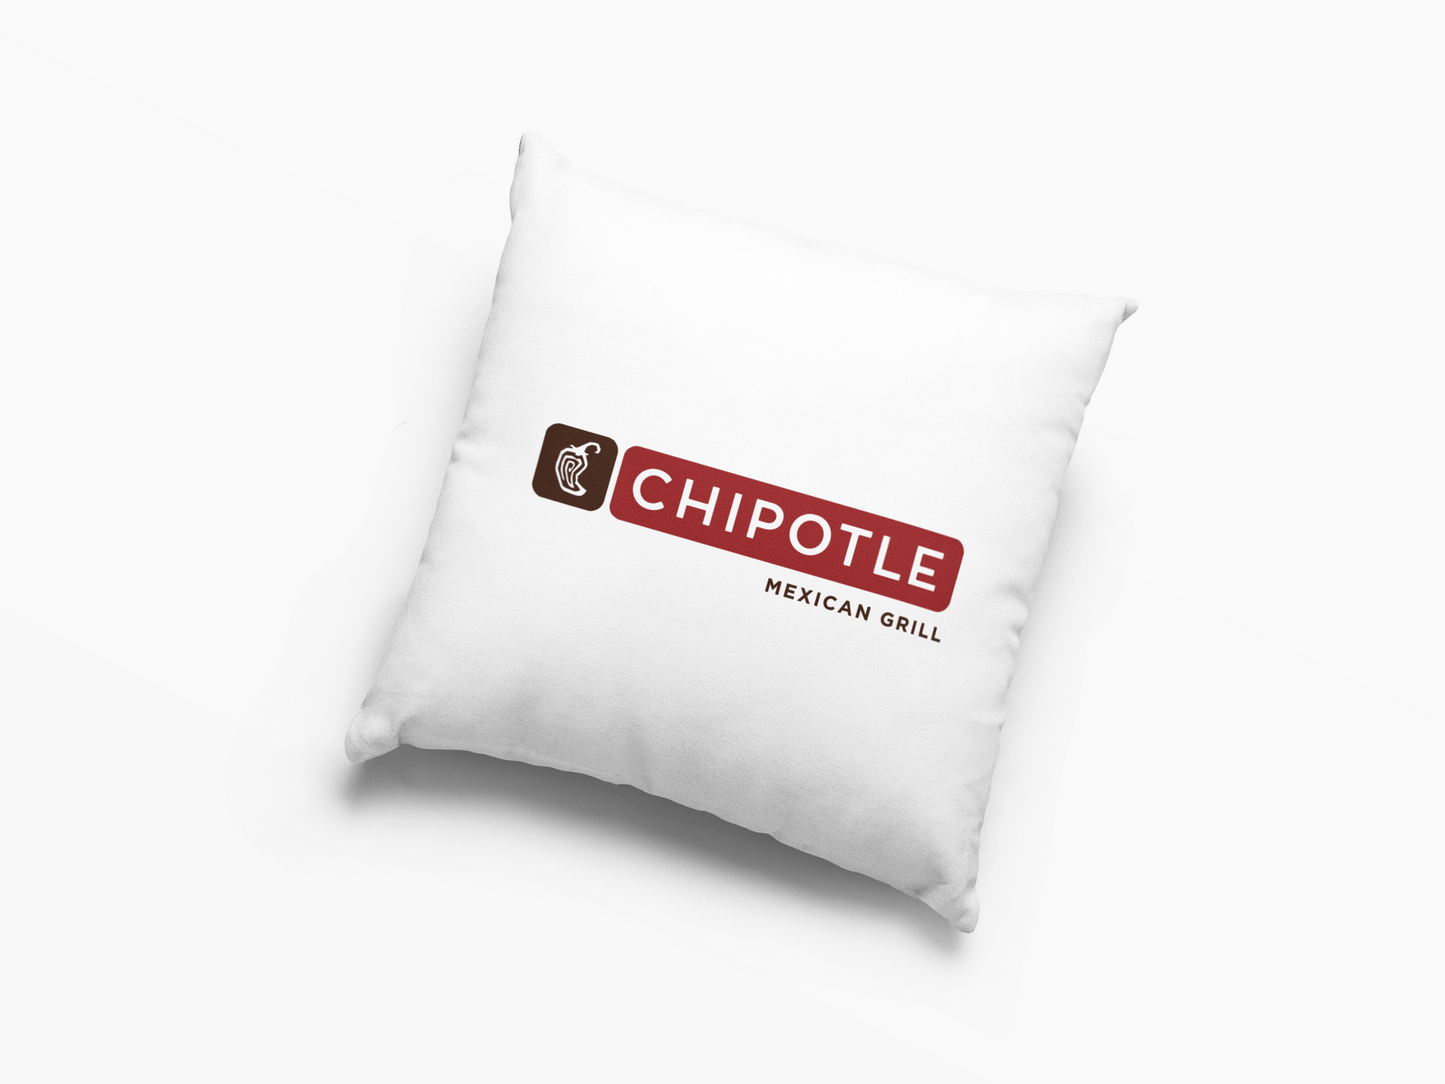 Chipotle Mexican Grill Logo Cushion Case / Pillow Case